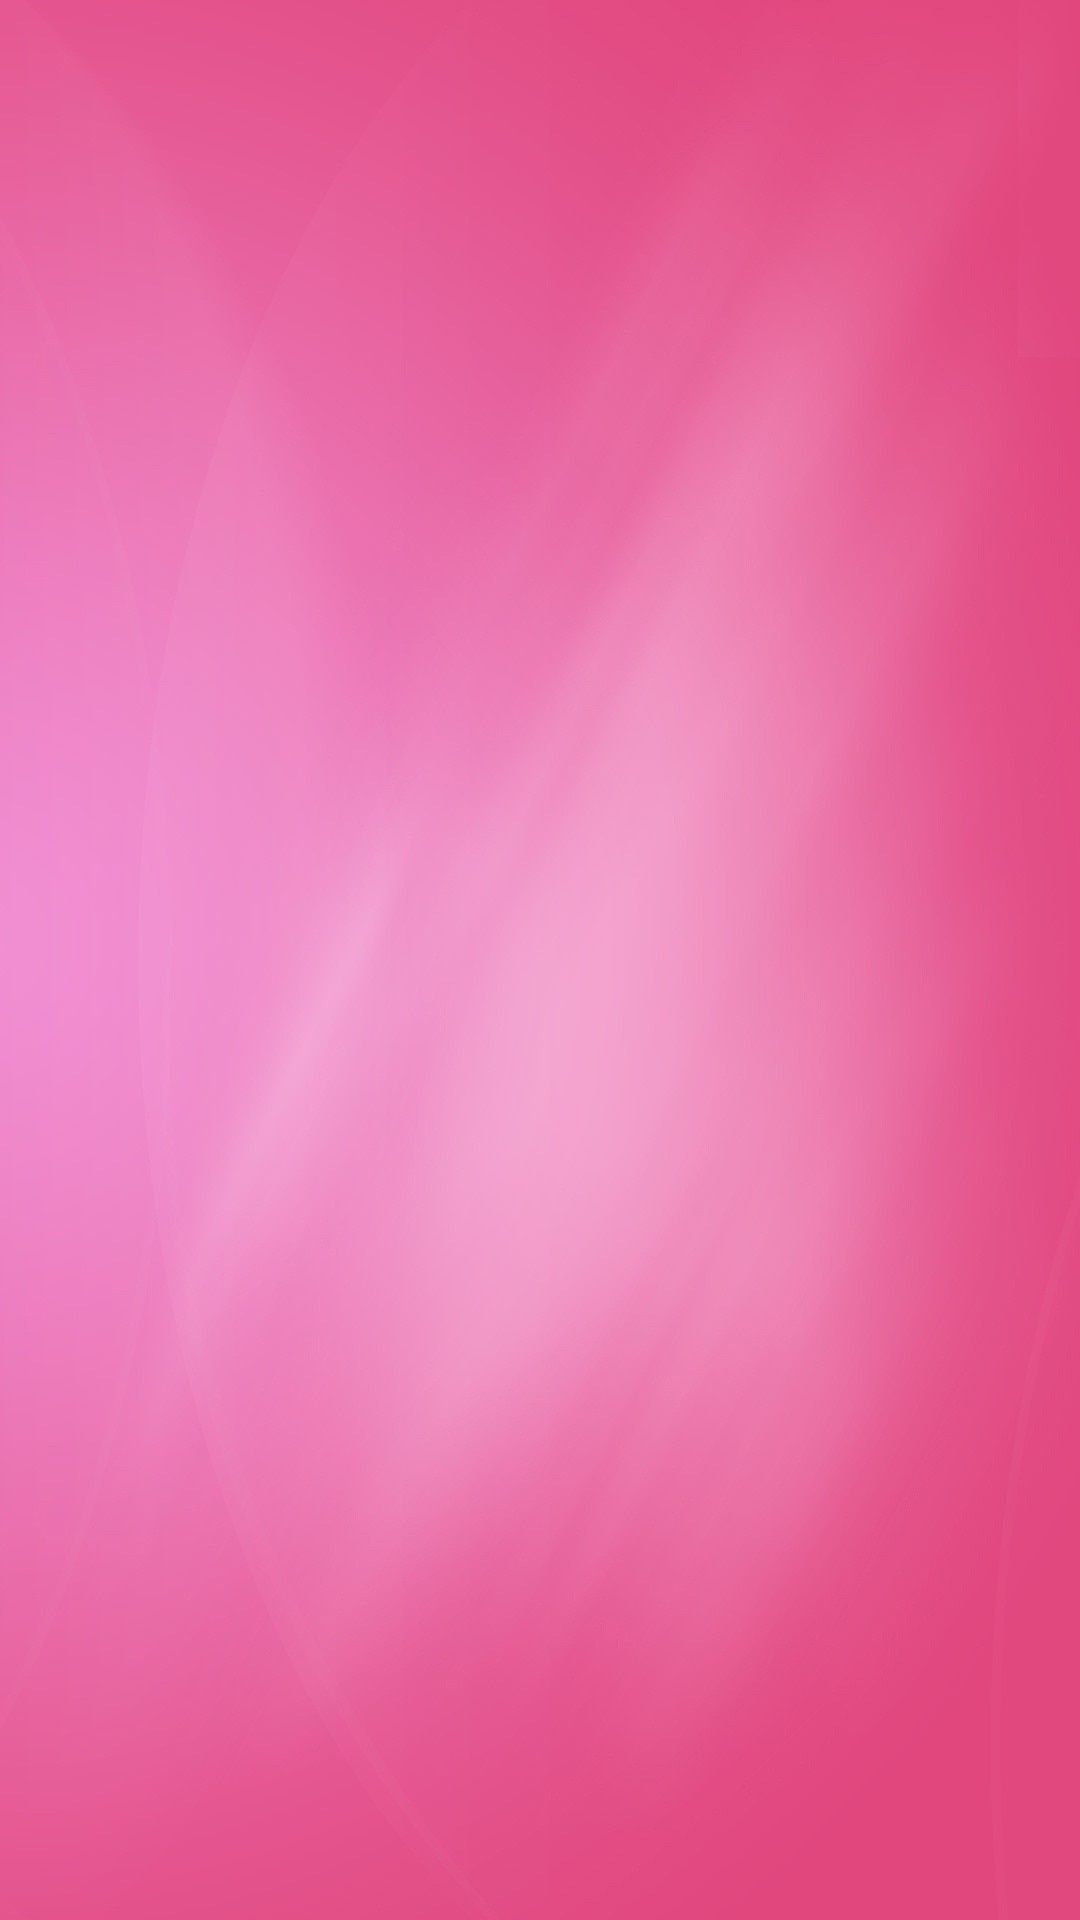 Wallpaper Weekends: In the Pink iPhone Wallpaper